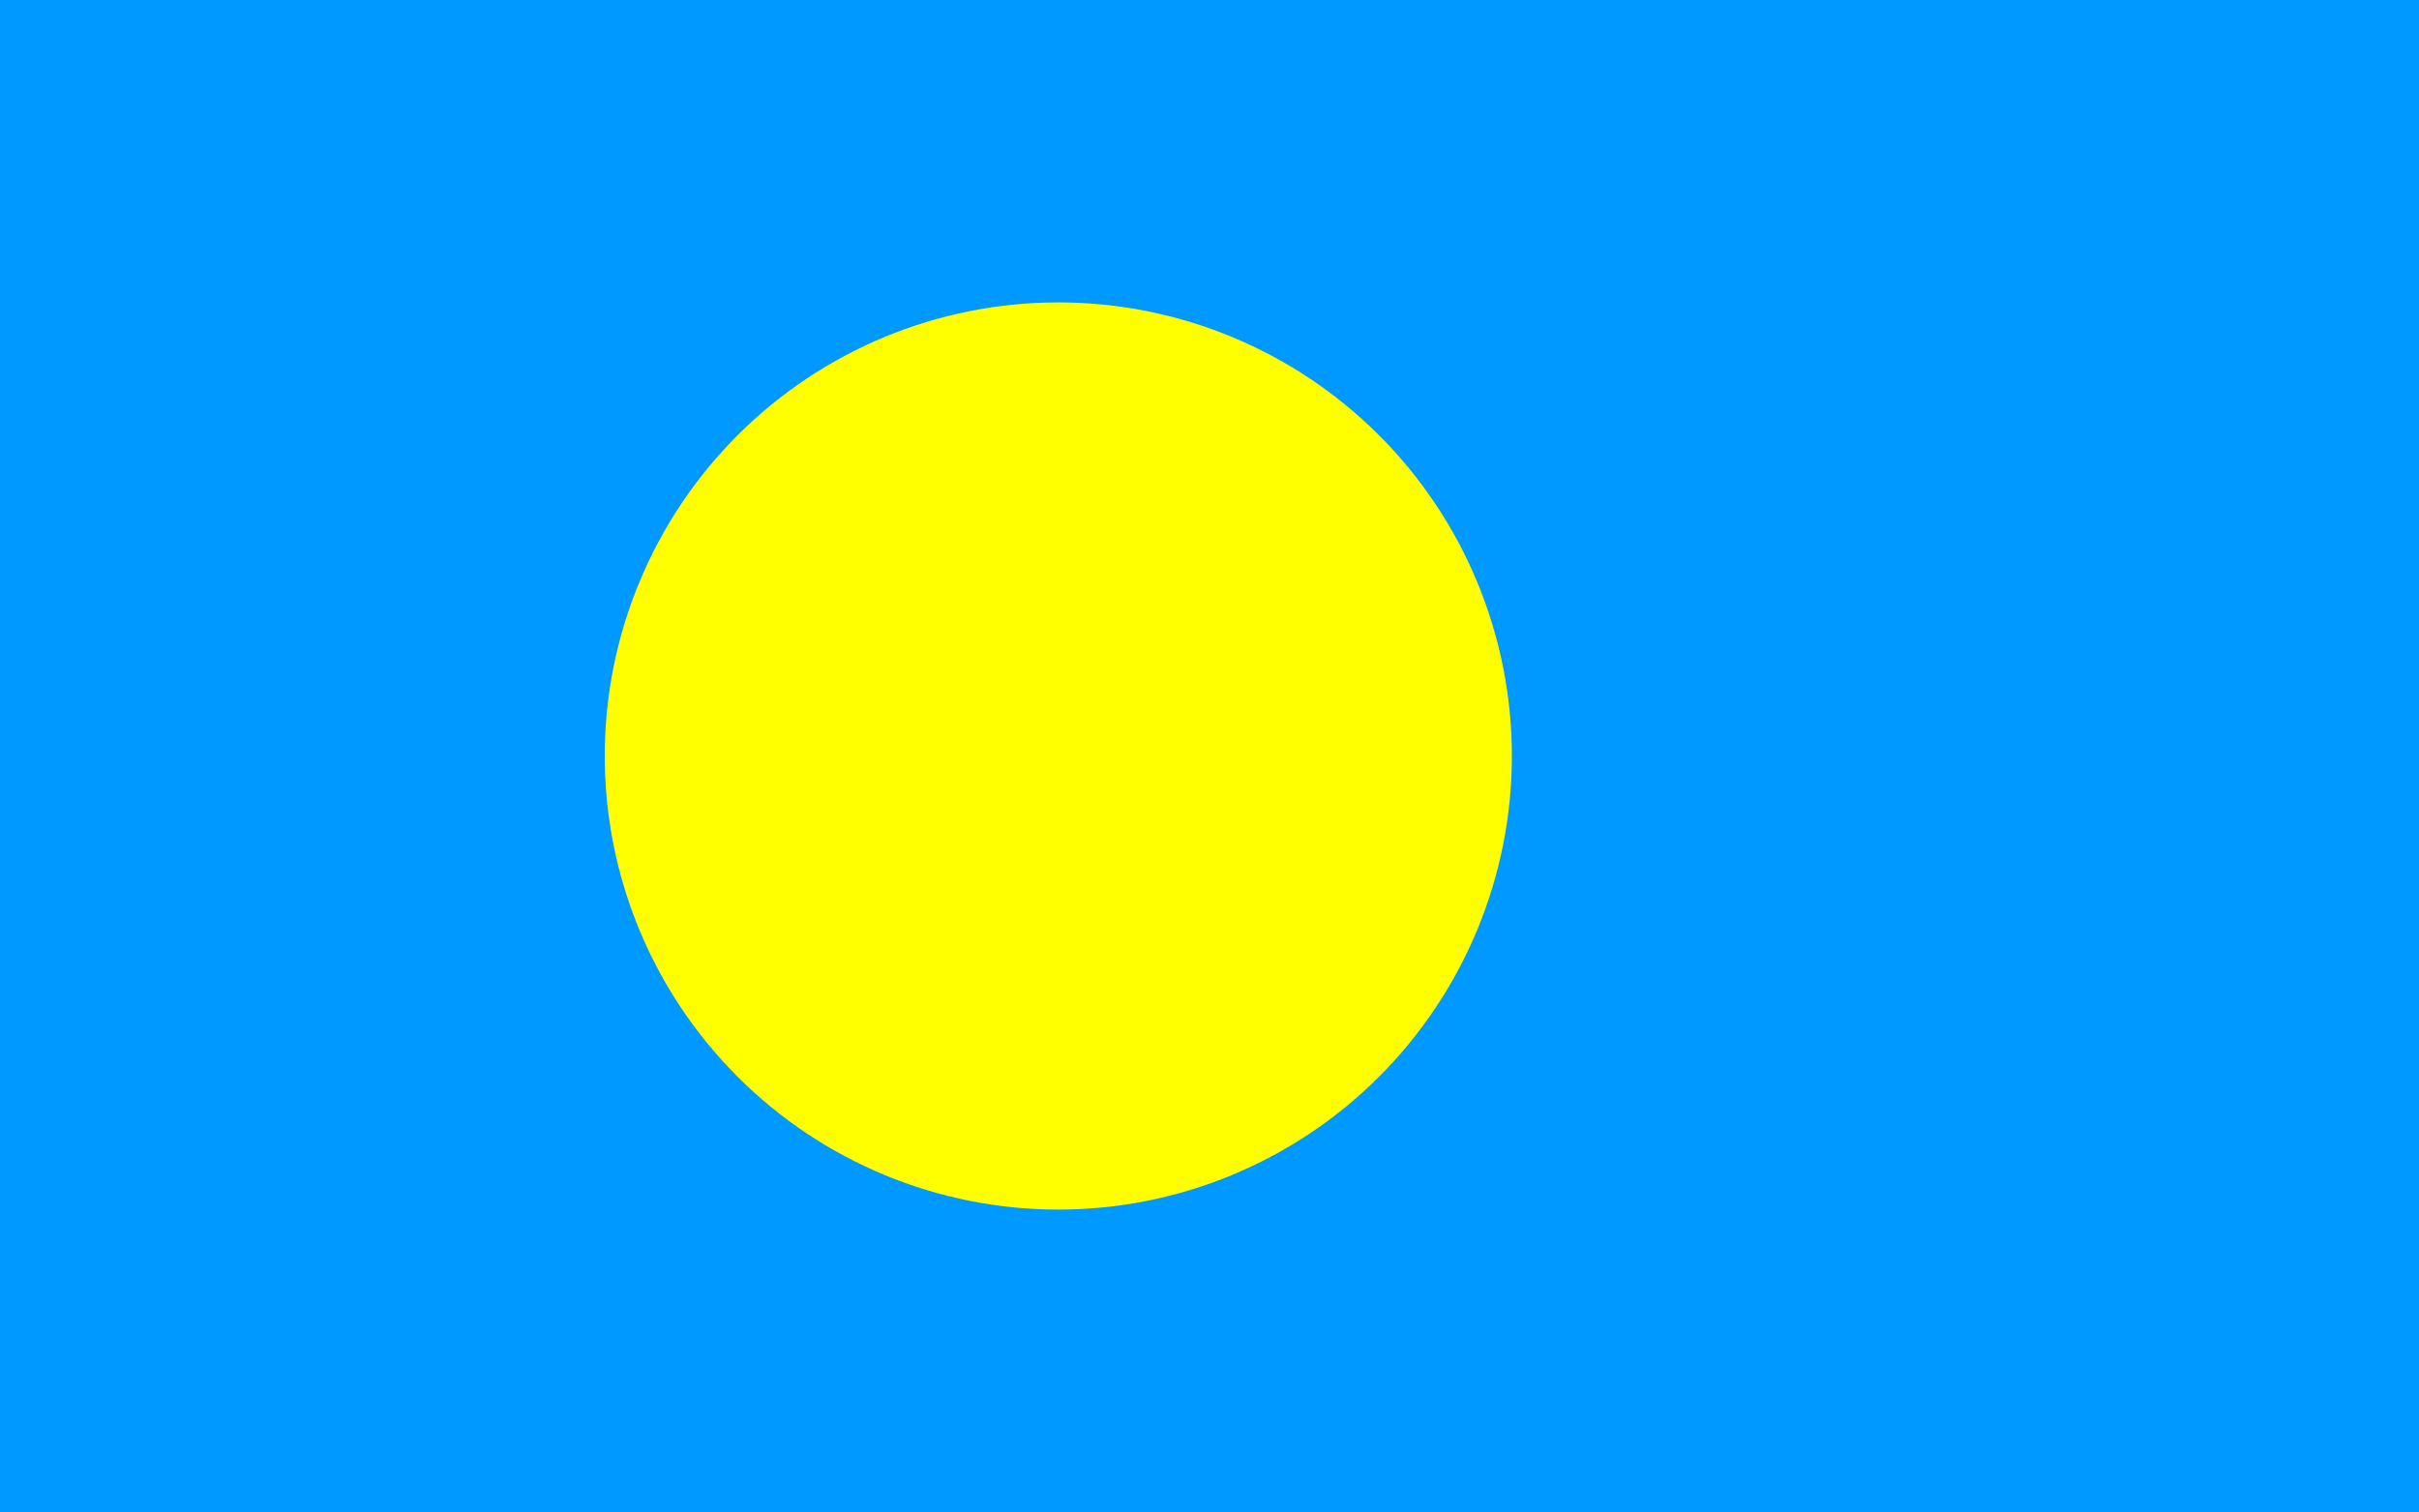 Free Palau Flag Documents: PDF, DOC, DOCX, HTML & More!